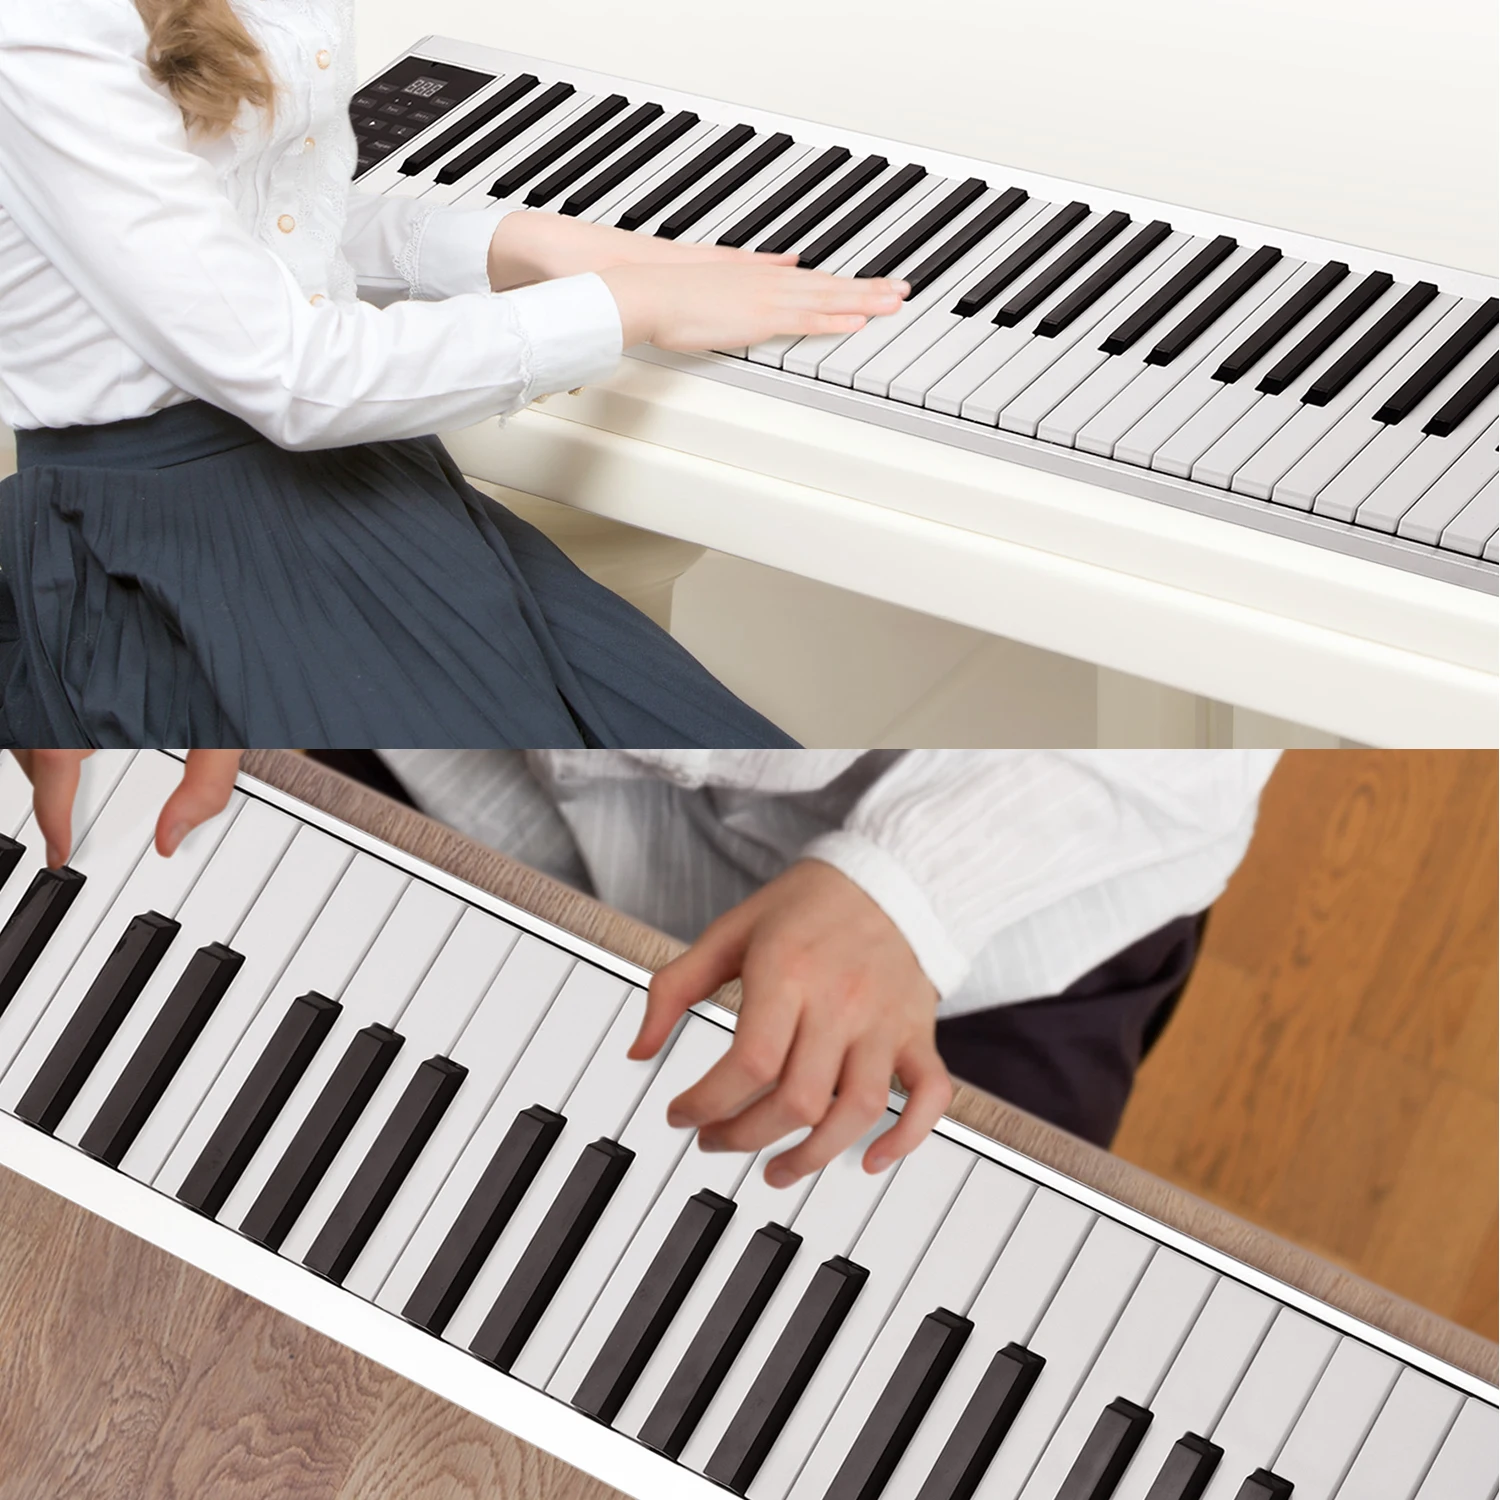 61 Keys Piano Keyboard Digital Electronic Piano Keyboard MIDI 